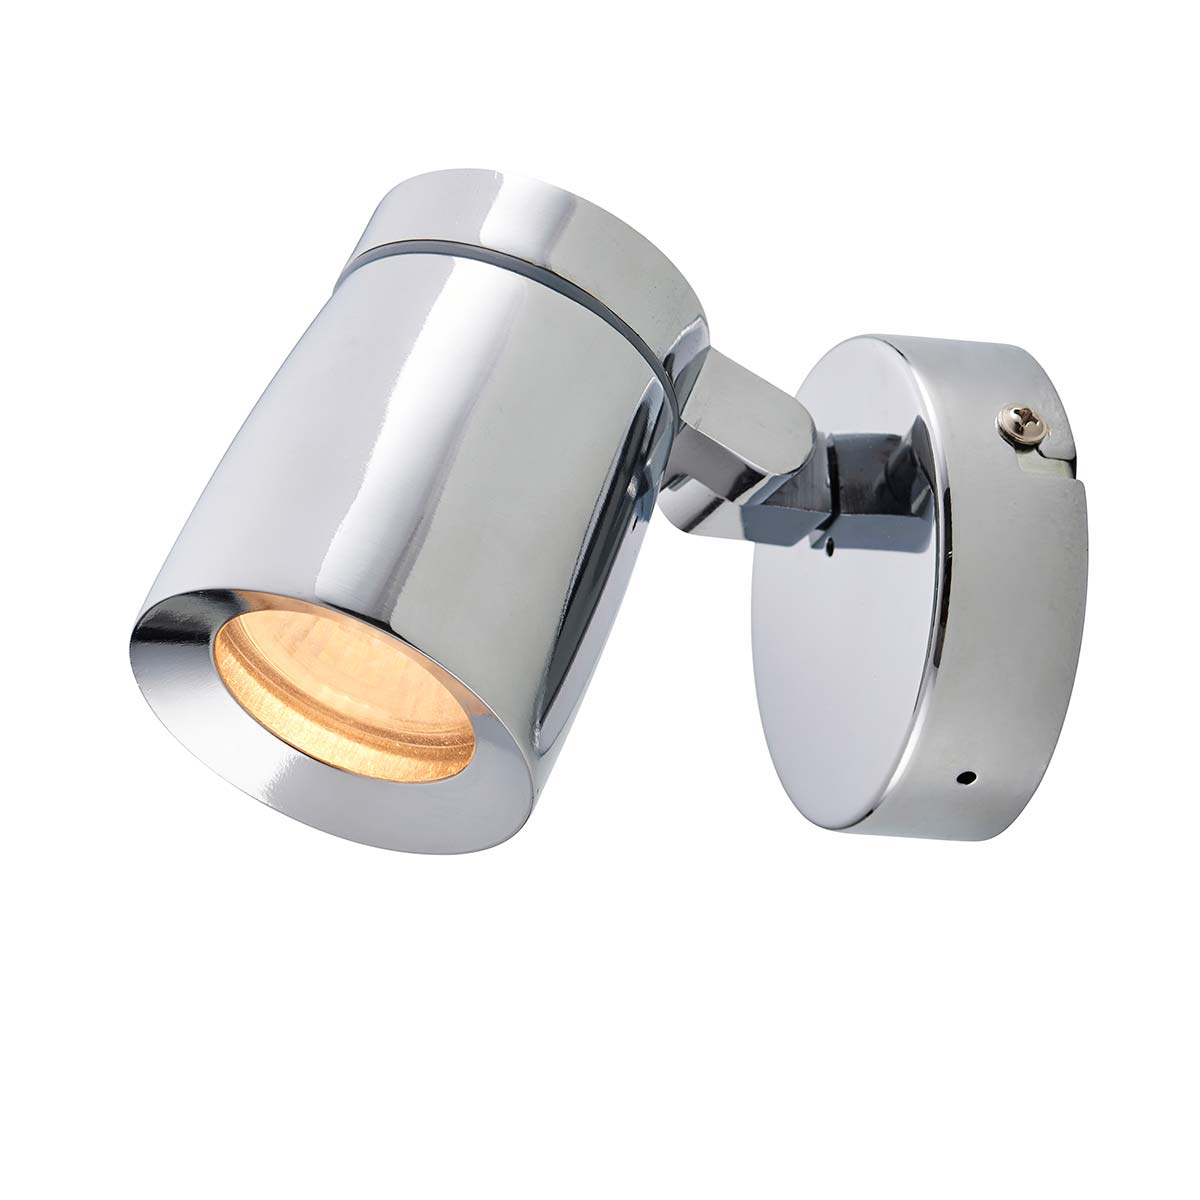 Knight Single Adjustable Bathroom Spot Light Chrome